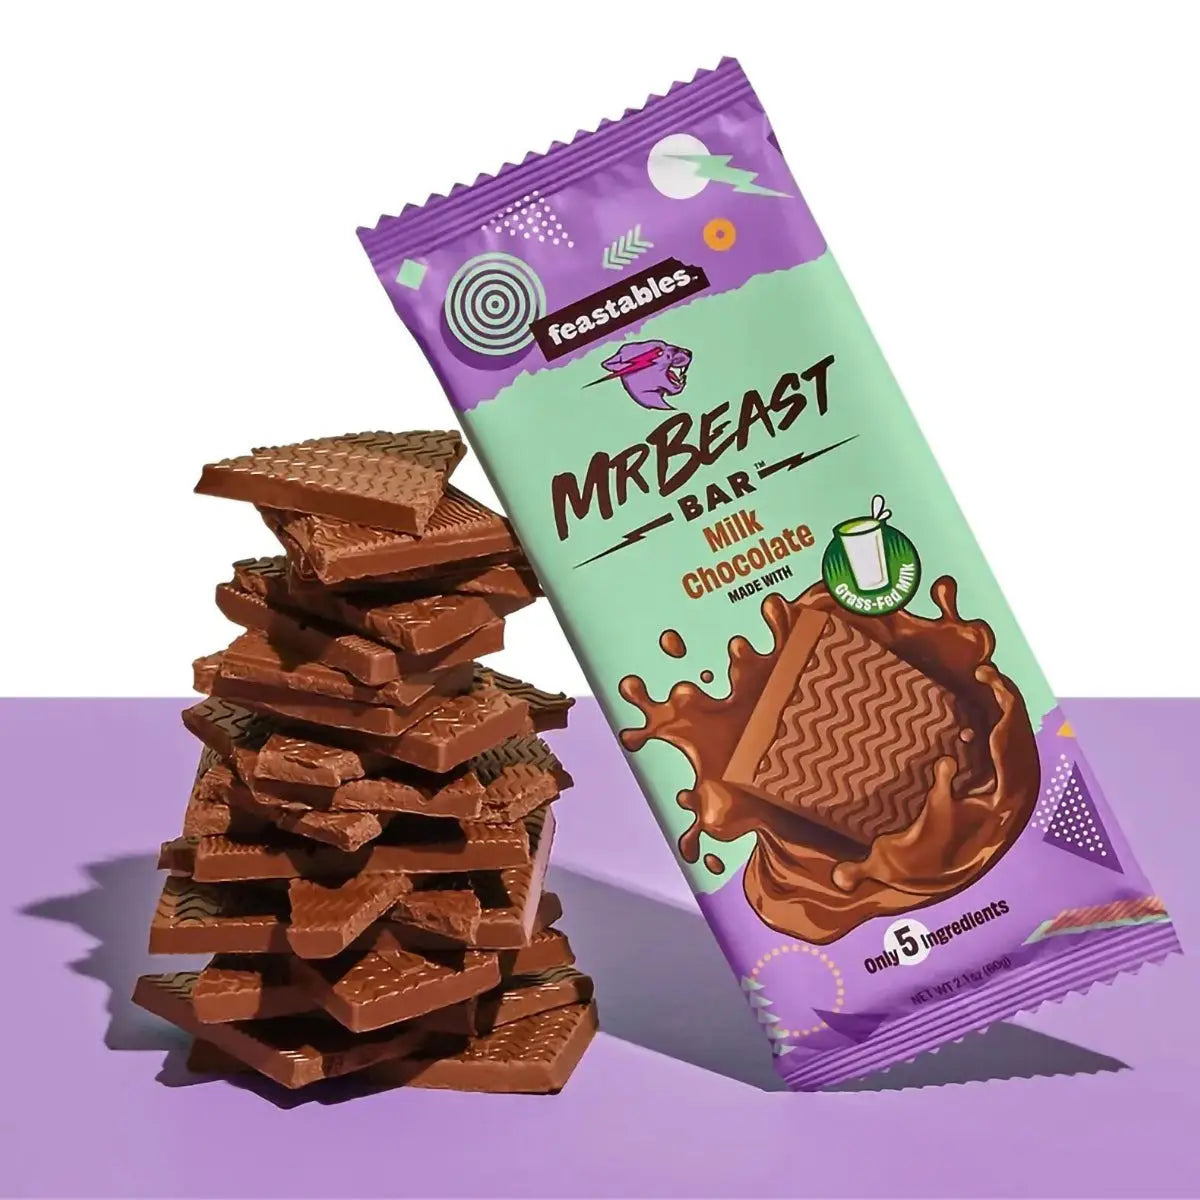 Feastables MrBeast Milk Chocolate Bar 35g